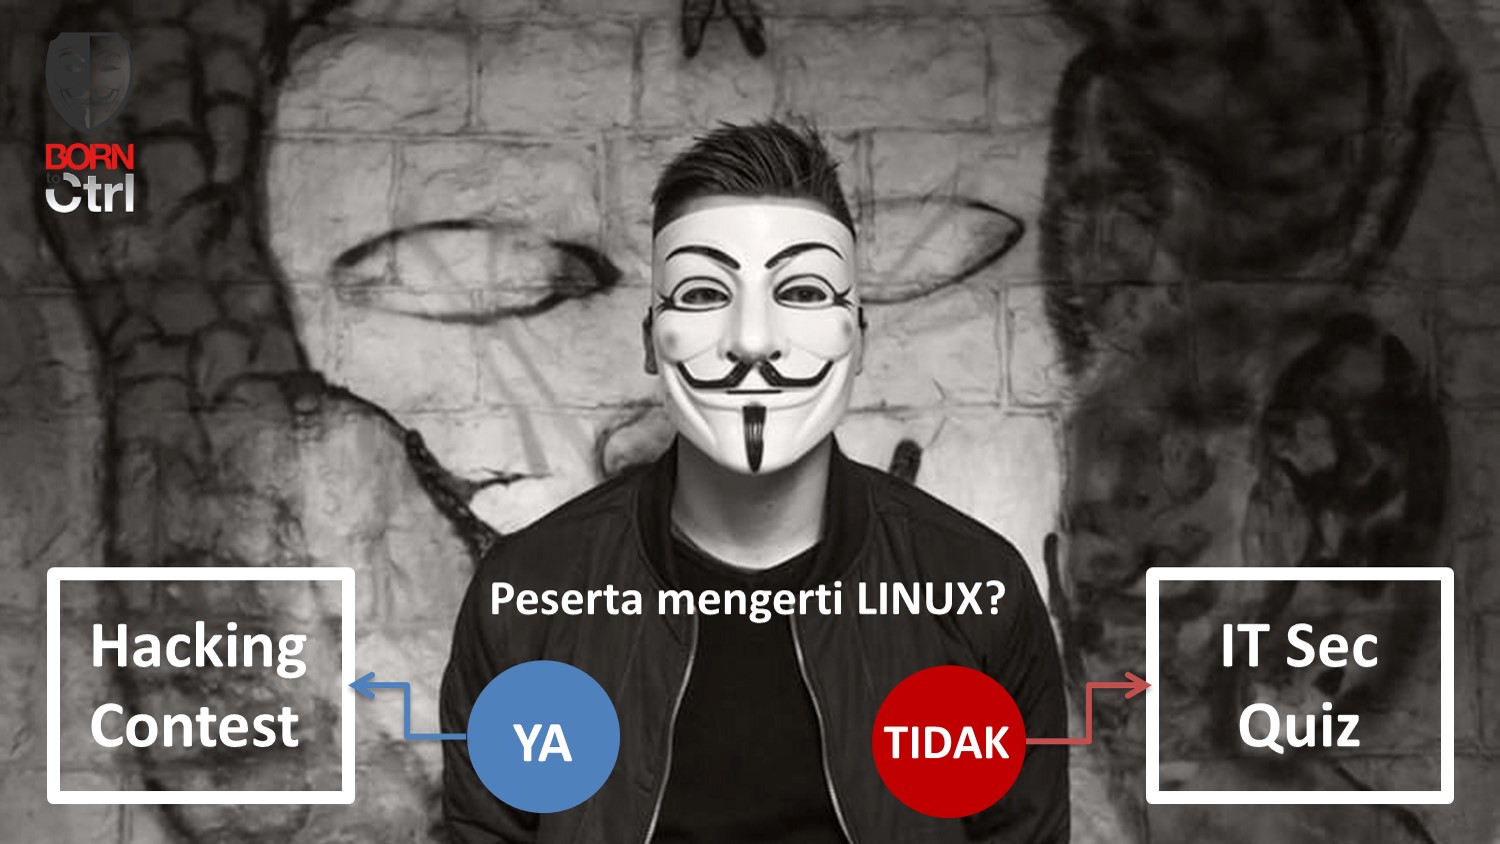 Born To Control Mencari Generasi Gladiator Cyber Security Indonesia